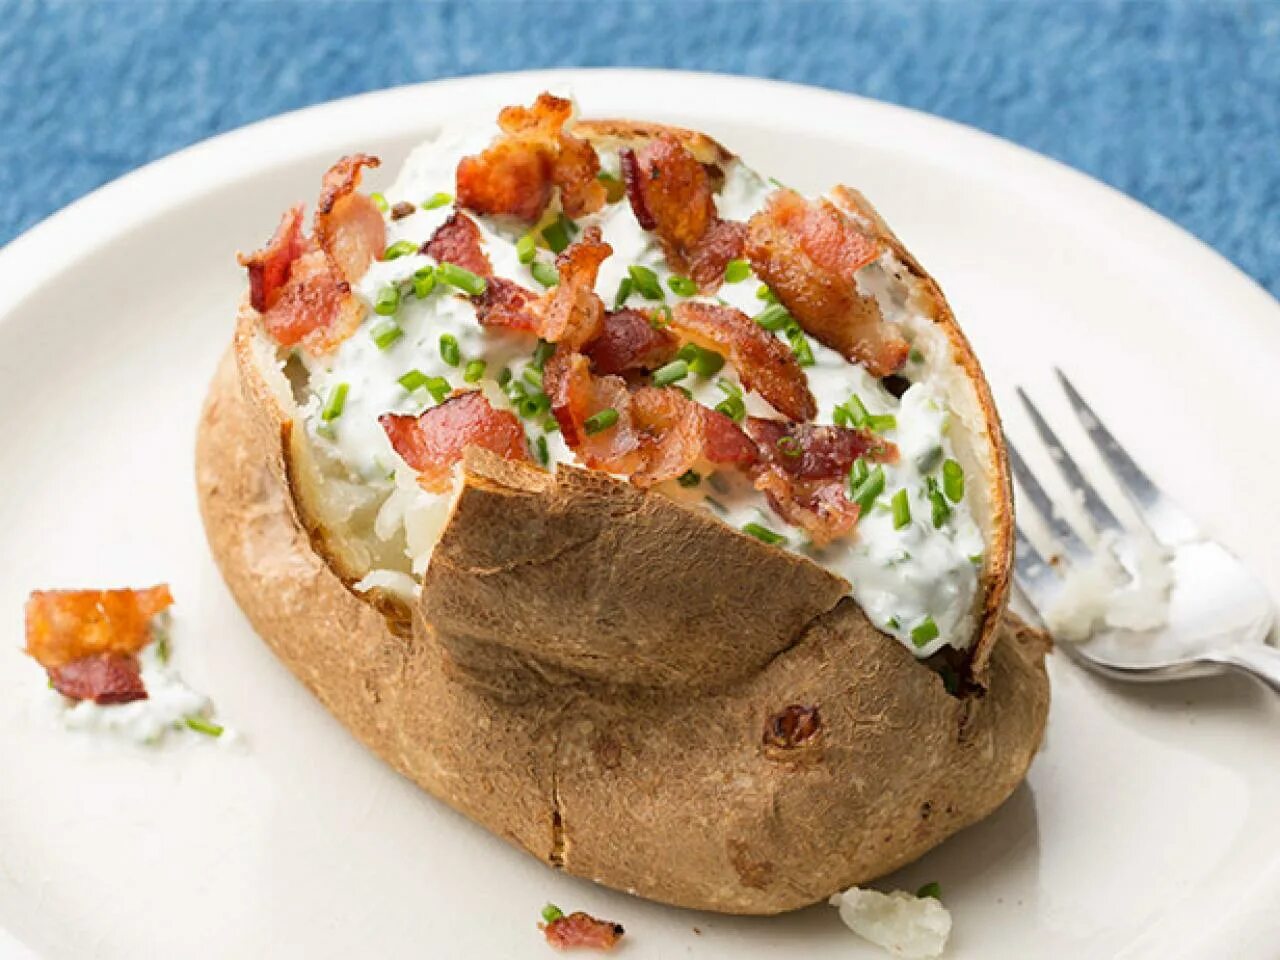 Baked Potato. Печеный картофель. Запеченный картофель с начинкой. Потата блюдо крошка картошка.